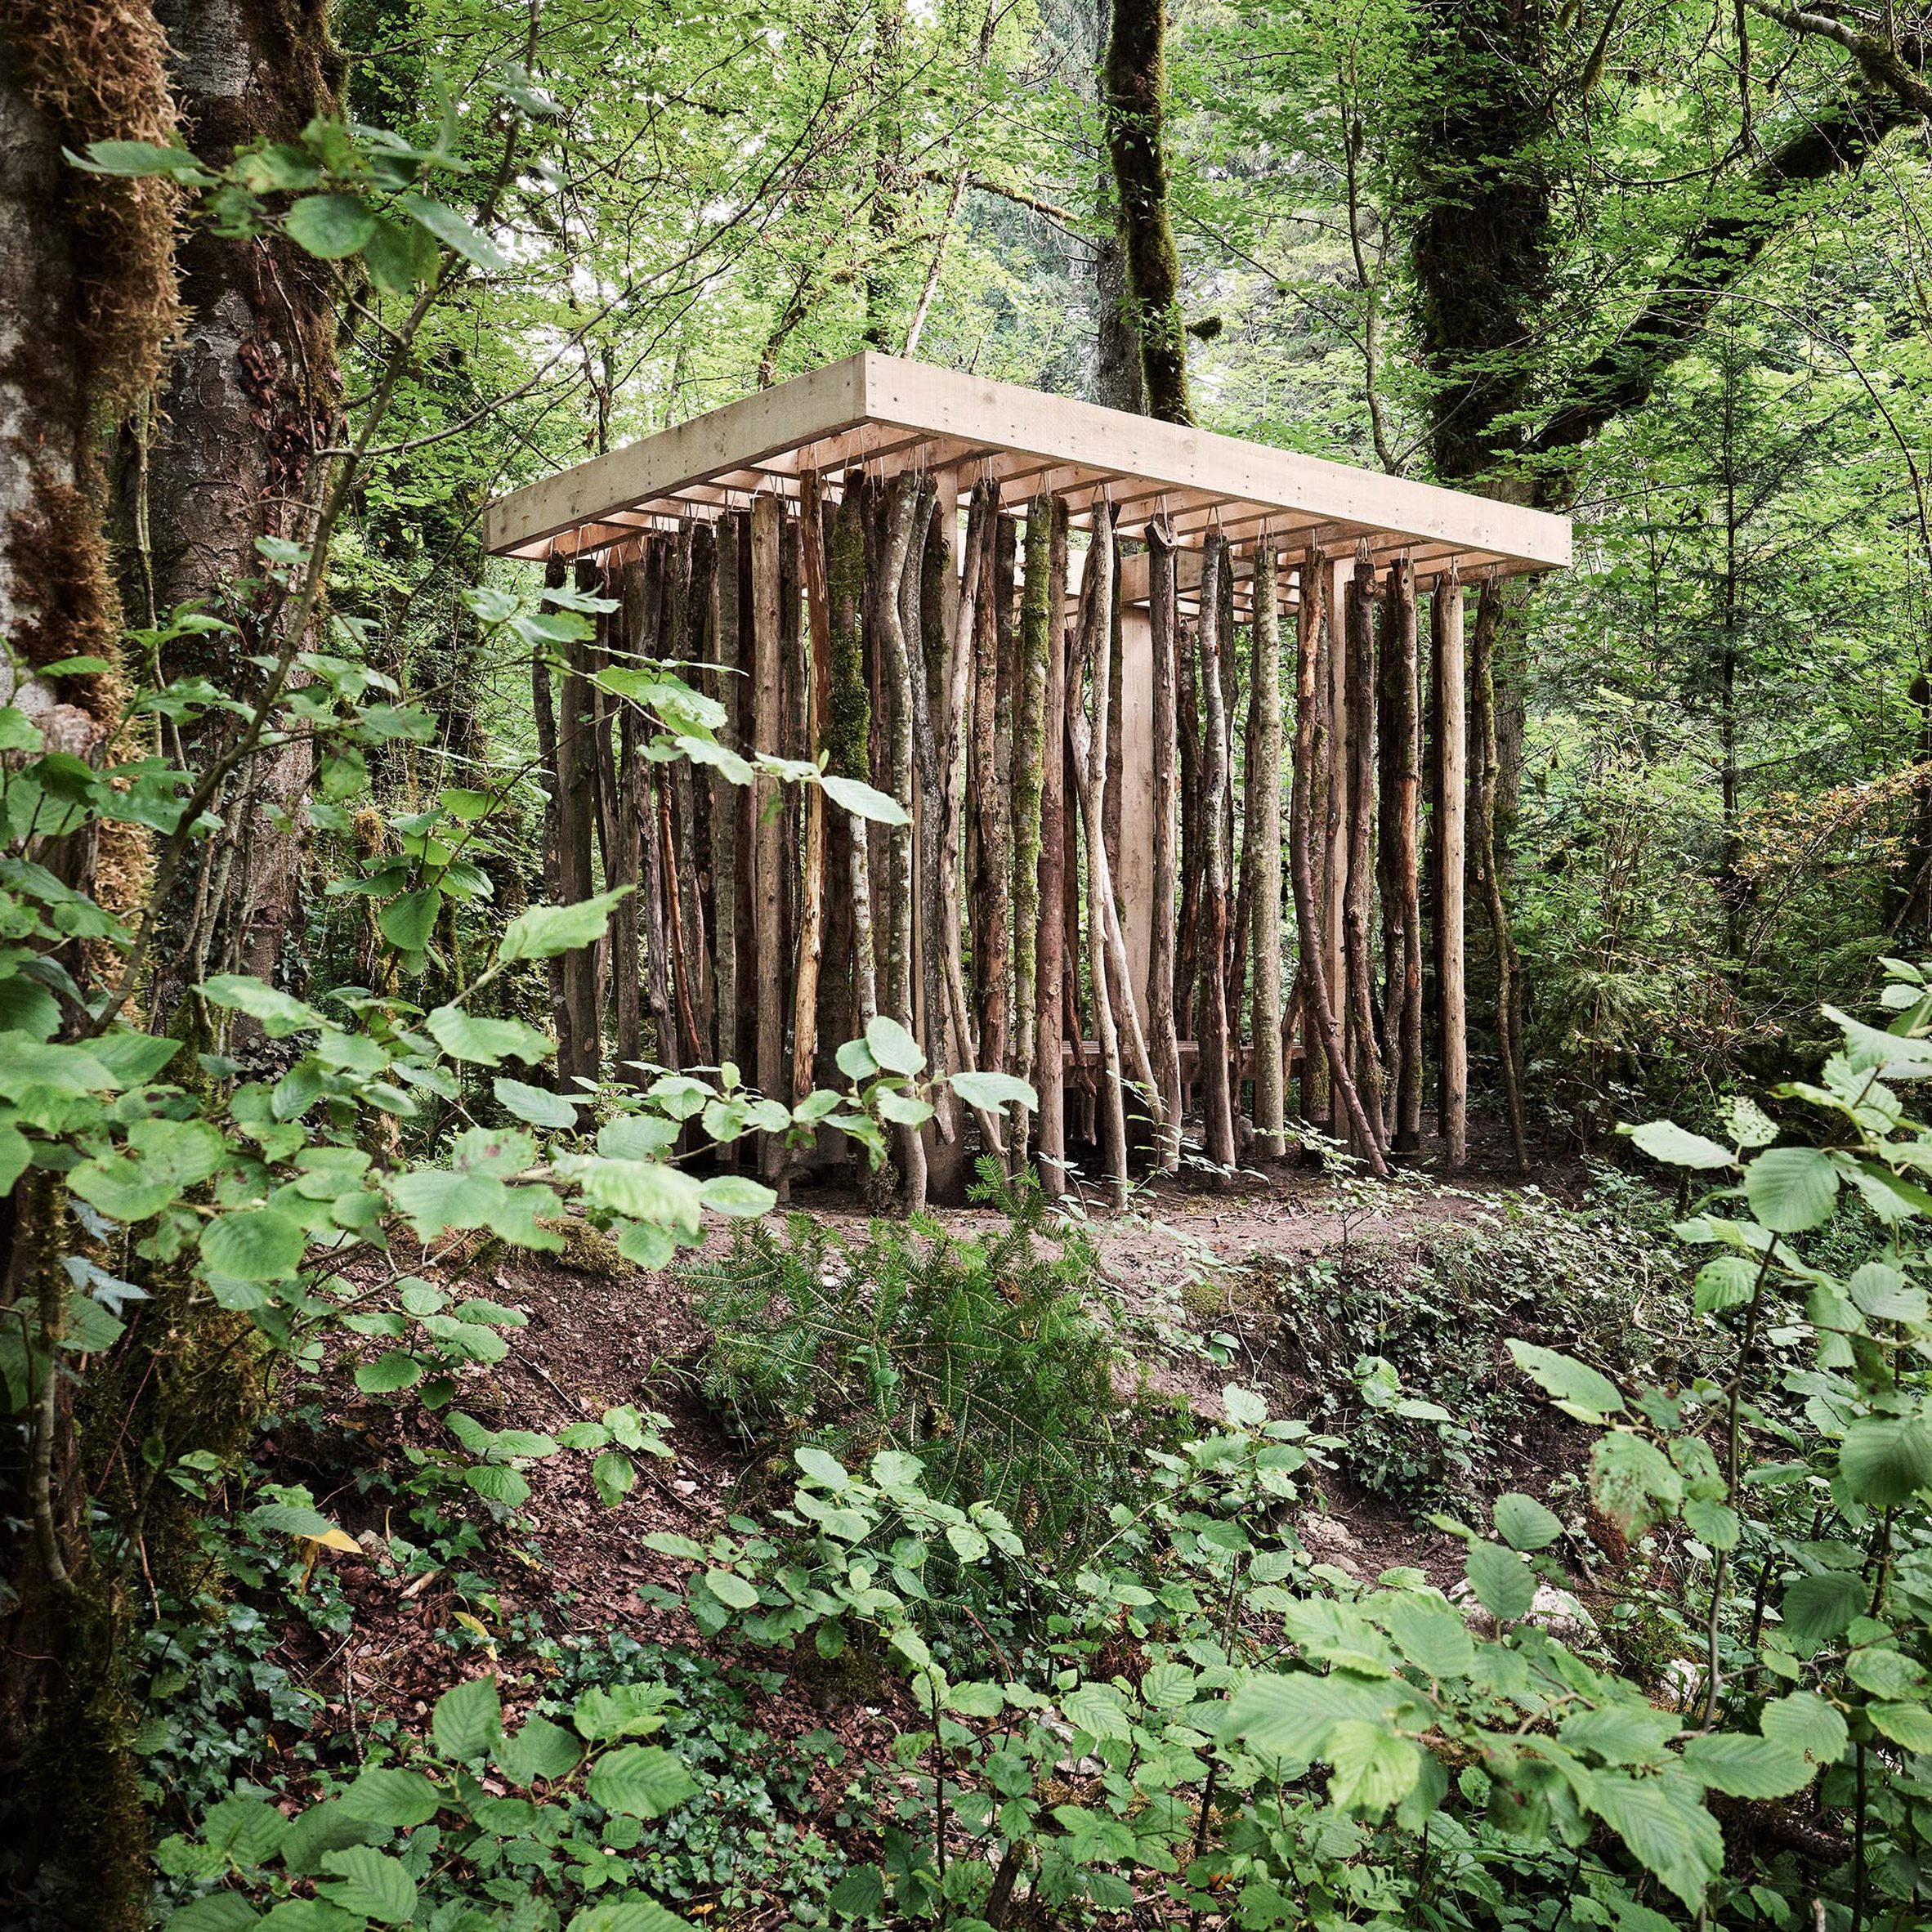 Sembilan kabin kayu dari Festival Kabin Danau Annecy | Harga Kusen Aluminium